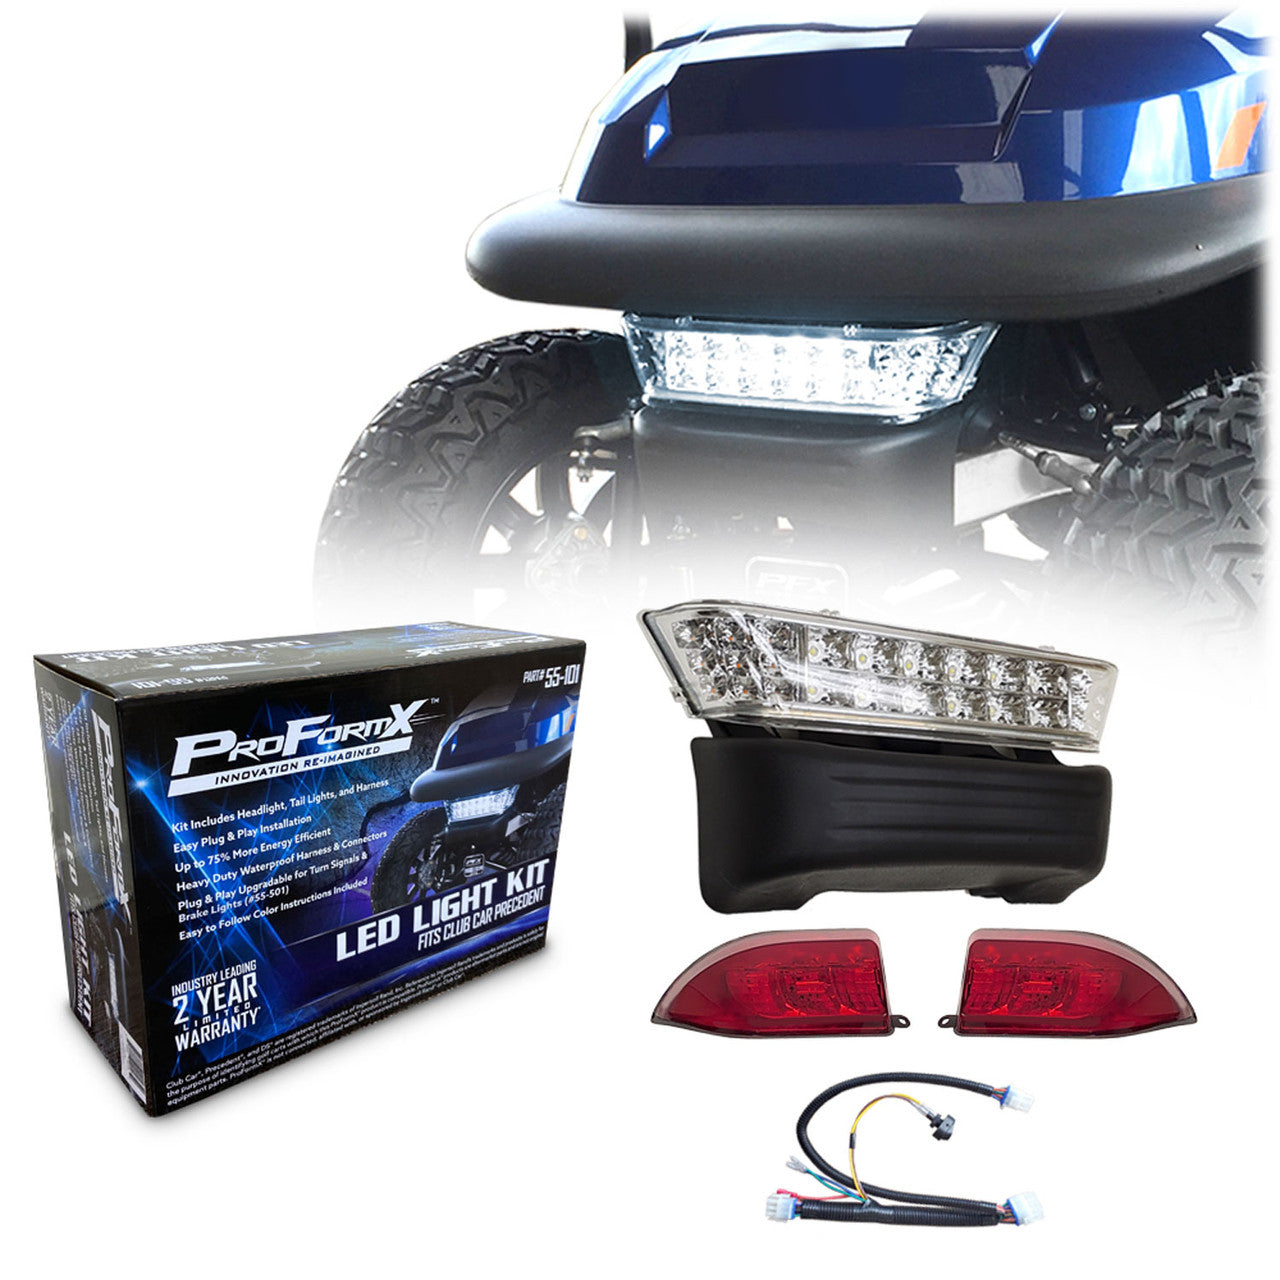 ProFormX LED Light Kit for Club Car Precedent (2004-2008)